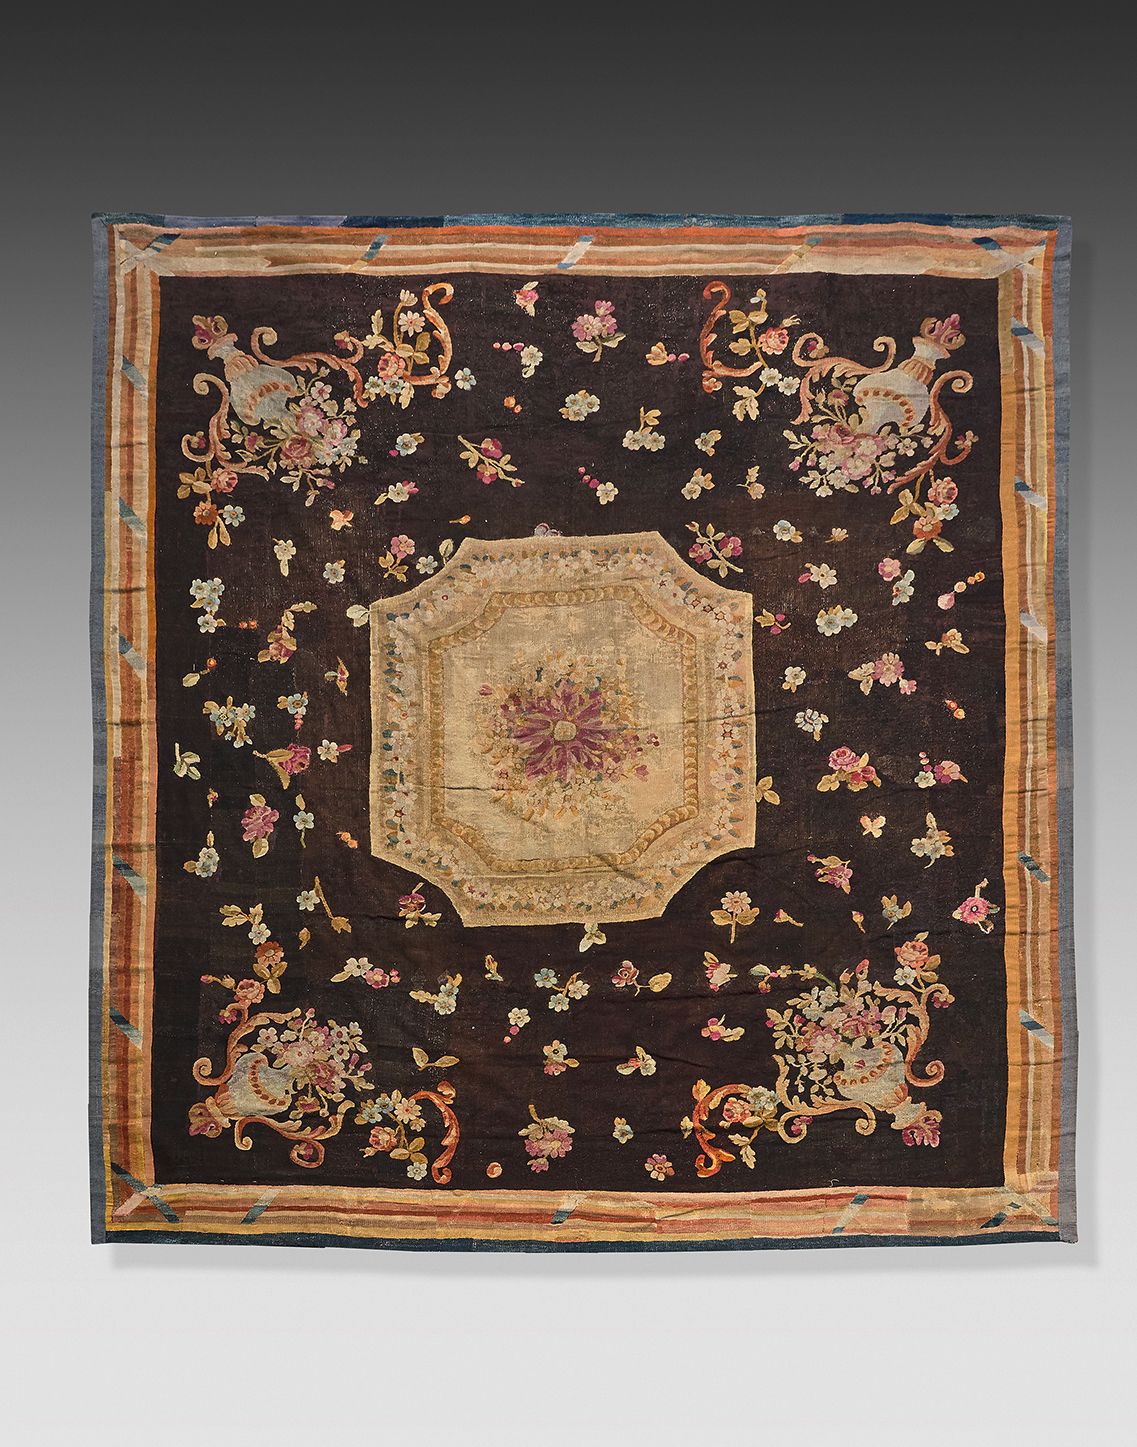 Null 粗糙的地毯上装饰着一个叫做Moresque玫瑰的中央徽章，包括在一个八角形的图案中，在四个角上有花瓶，田野上装饰着棕色背景的花苗。
royale d'&hellip;